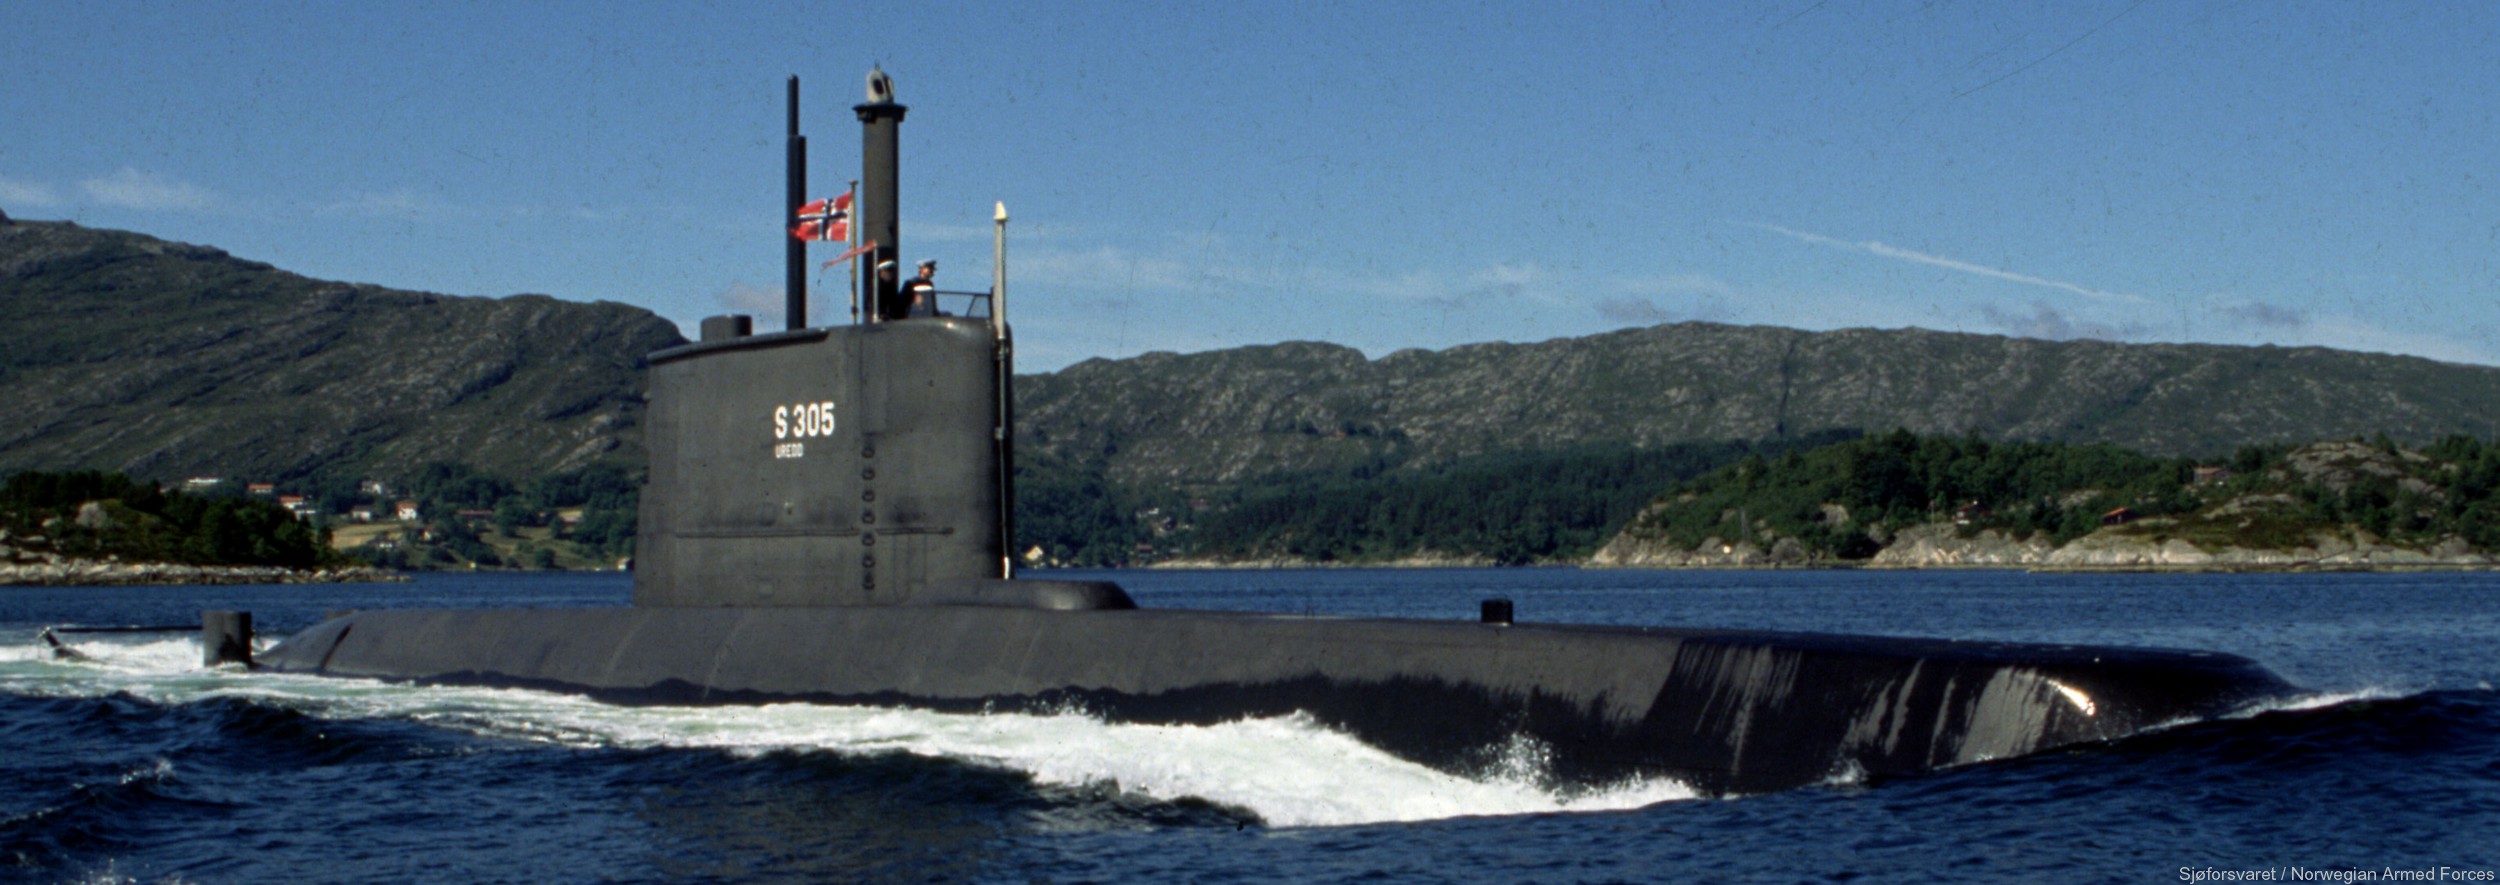 s-305 hnoms knm uredd ula class submarine type 210 attack ssk undervannsbåt royal norwegian navy sjøforsvaret 07